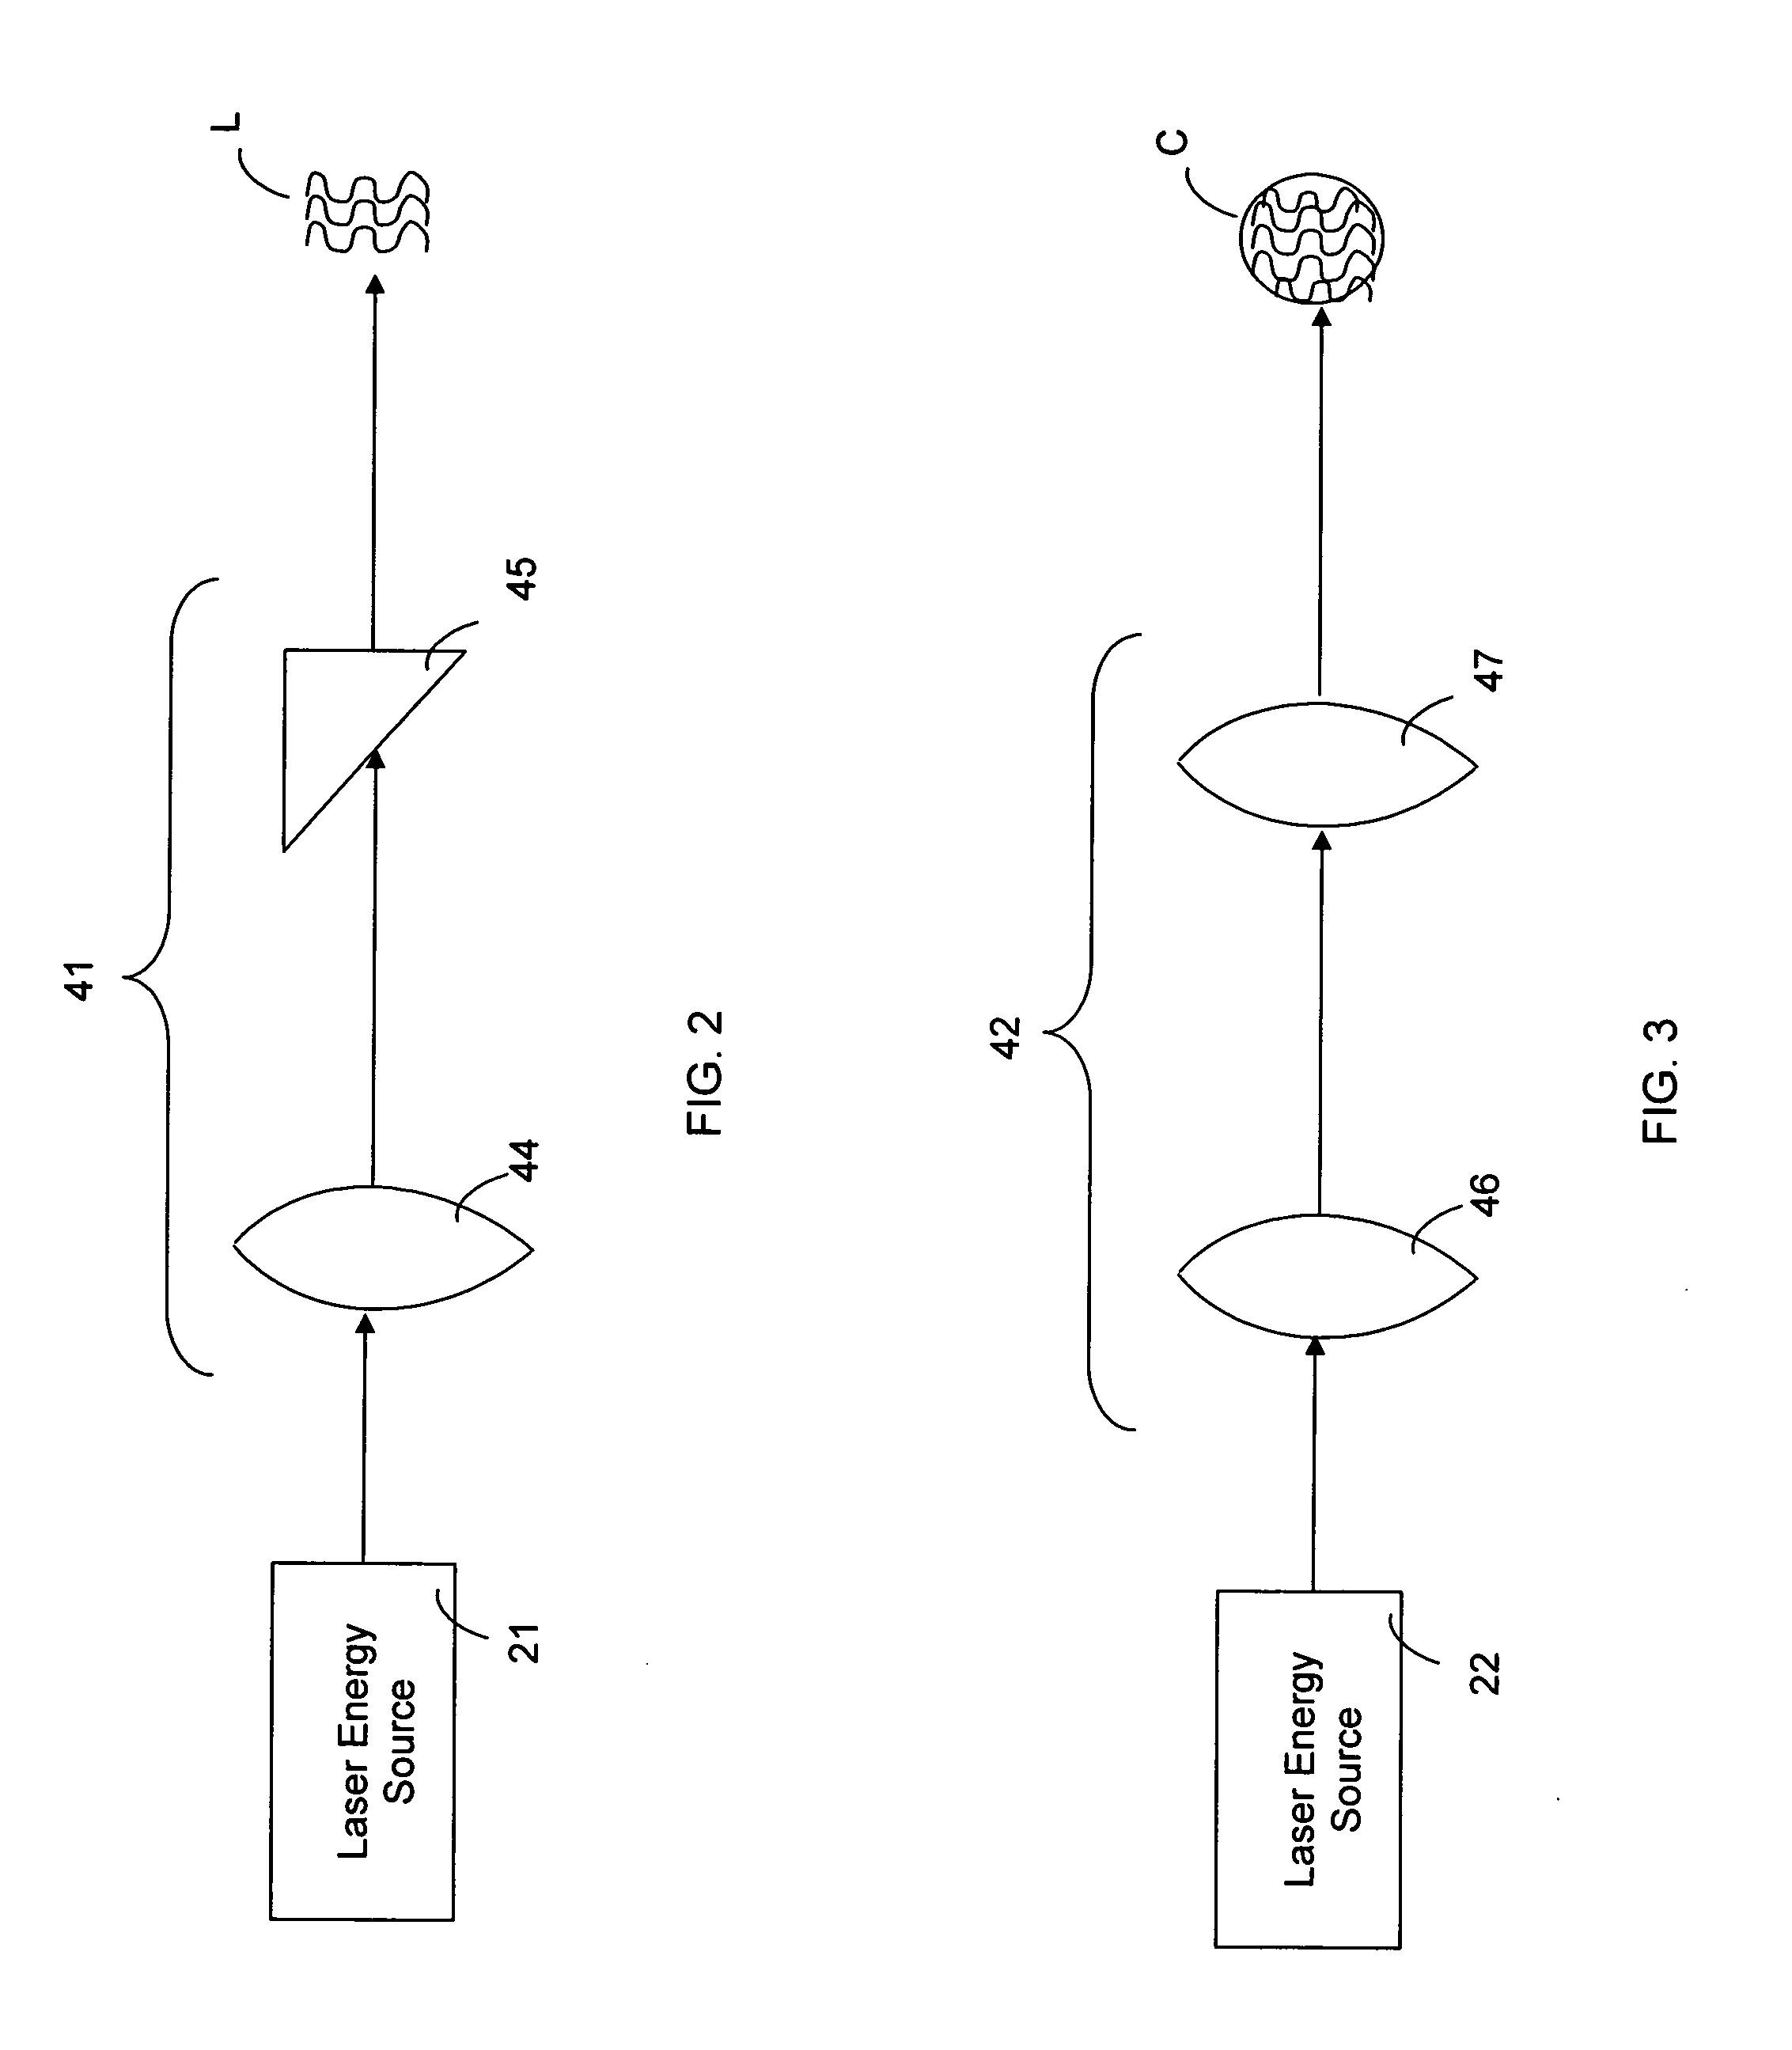 Method of using multi-probe laser device